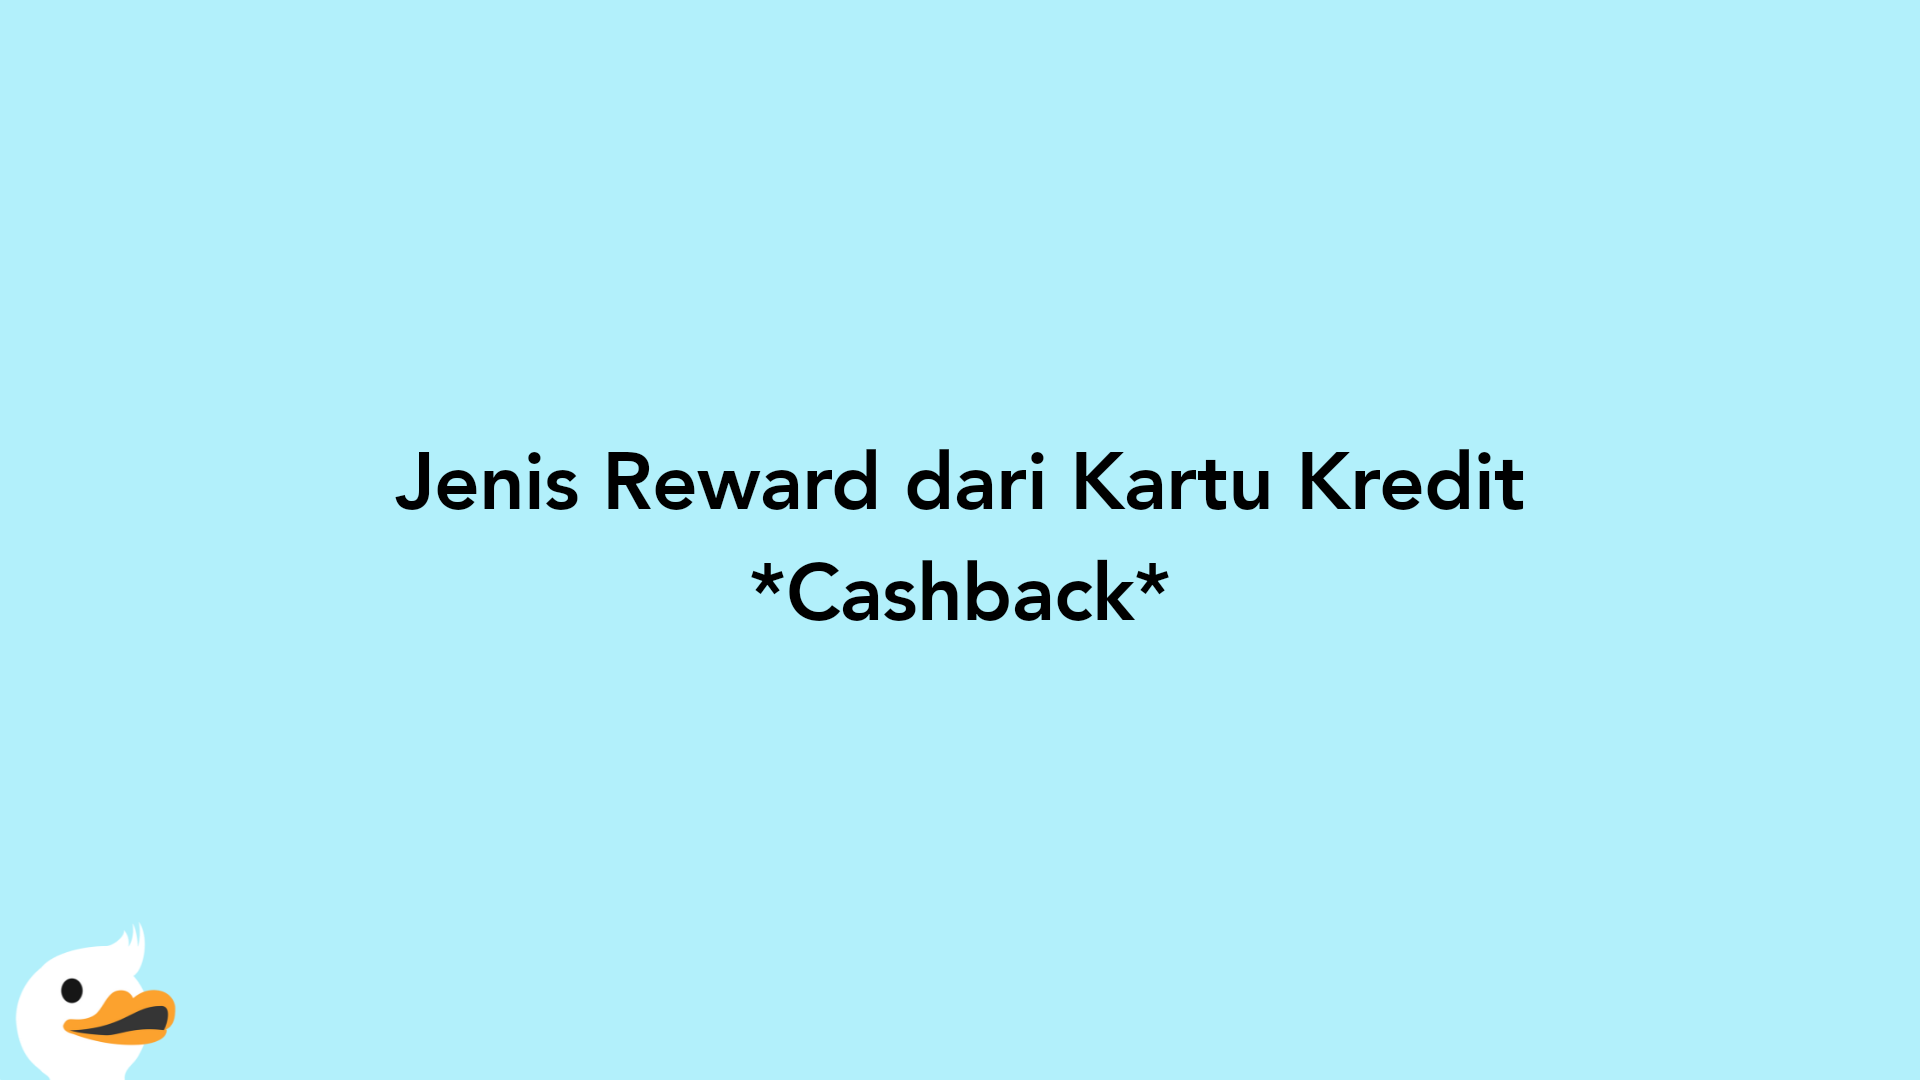 Jenis Reward dari Kartu Kredit Cashback